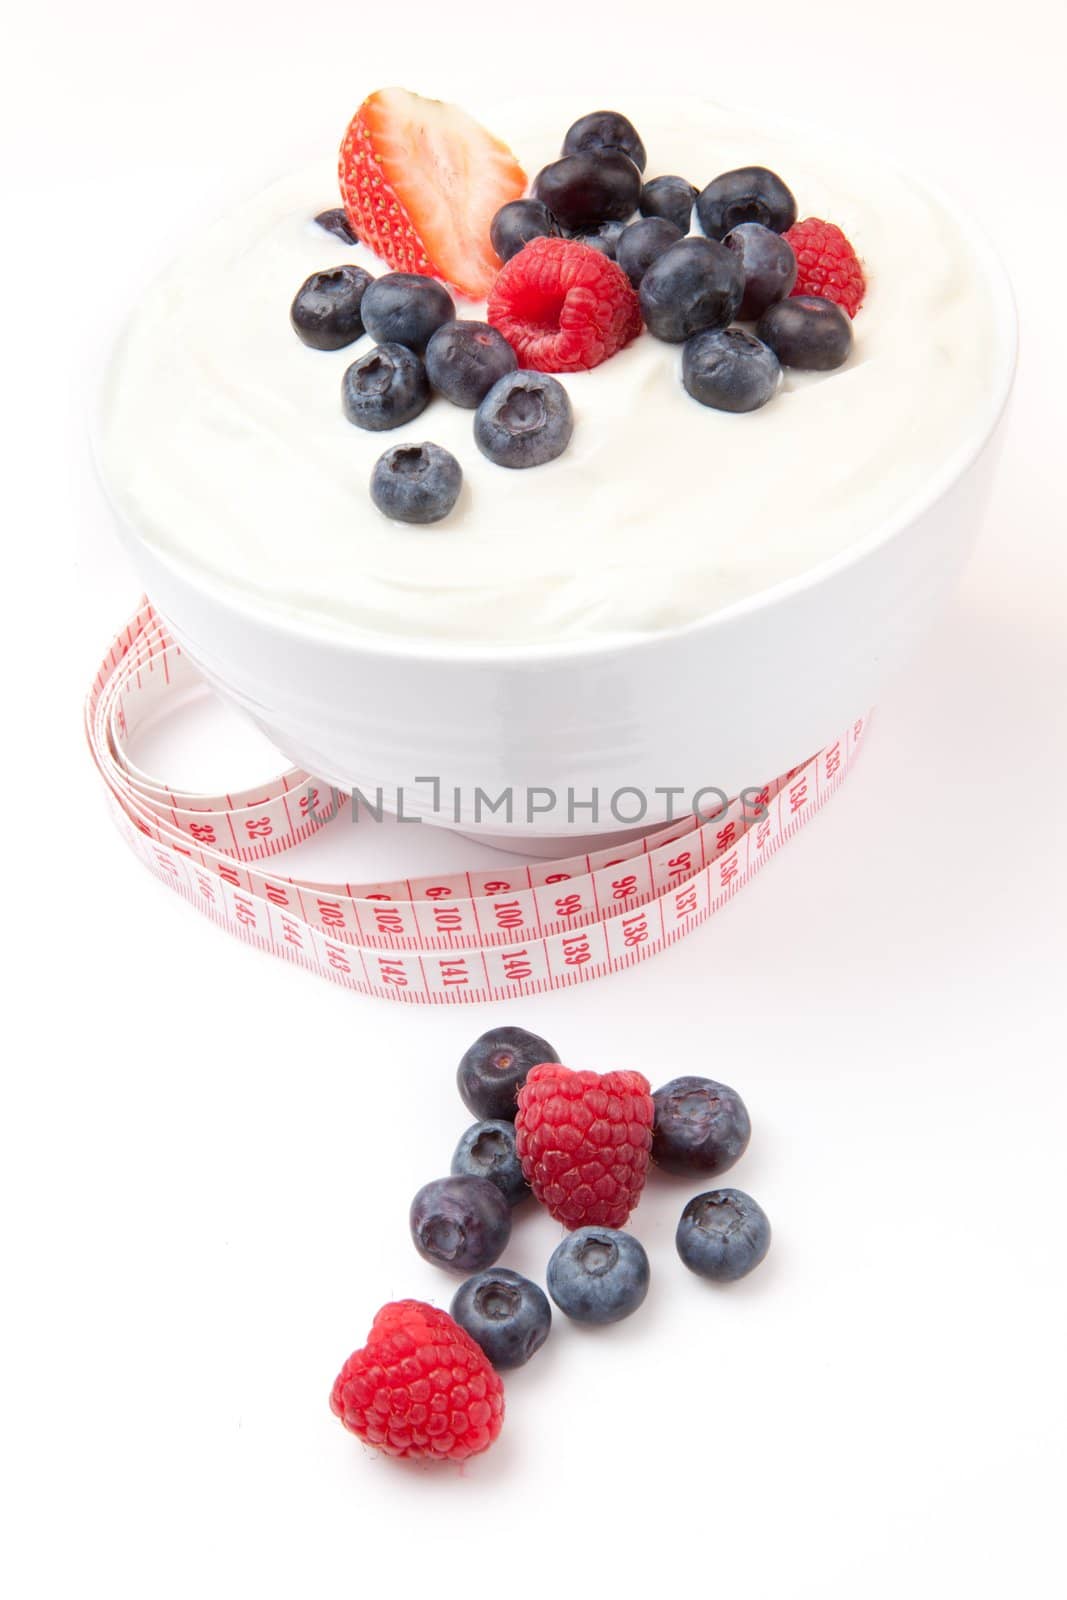 Tape measure and berries cream by Wavebreakmedia